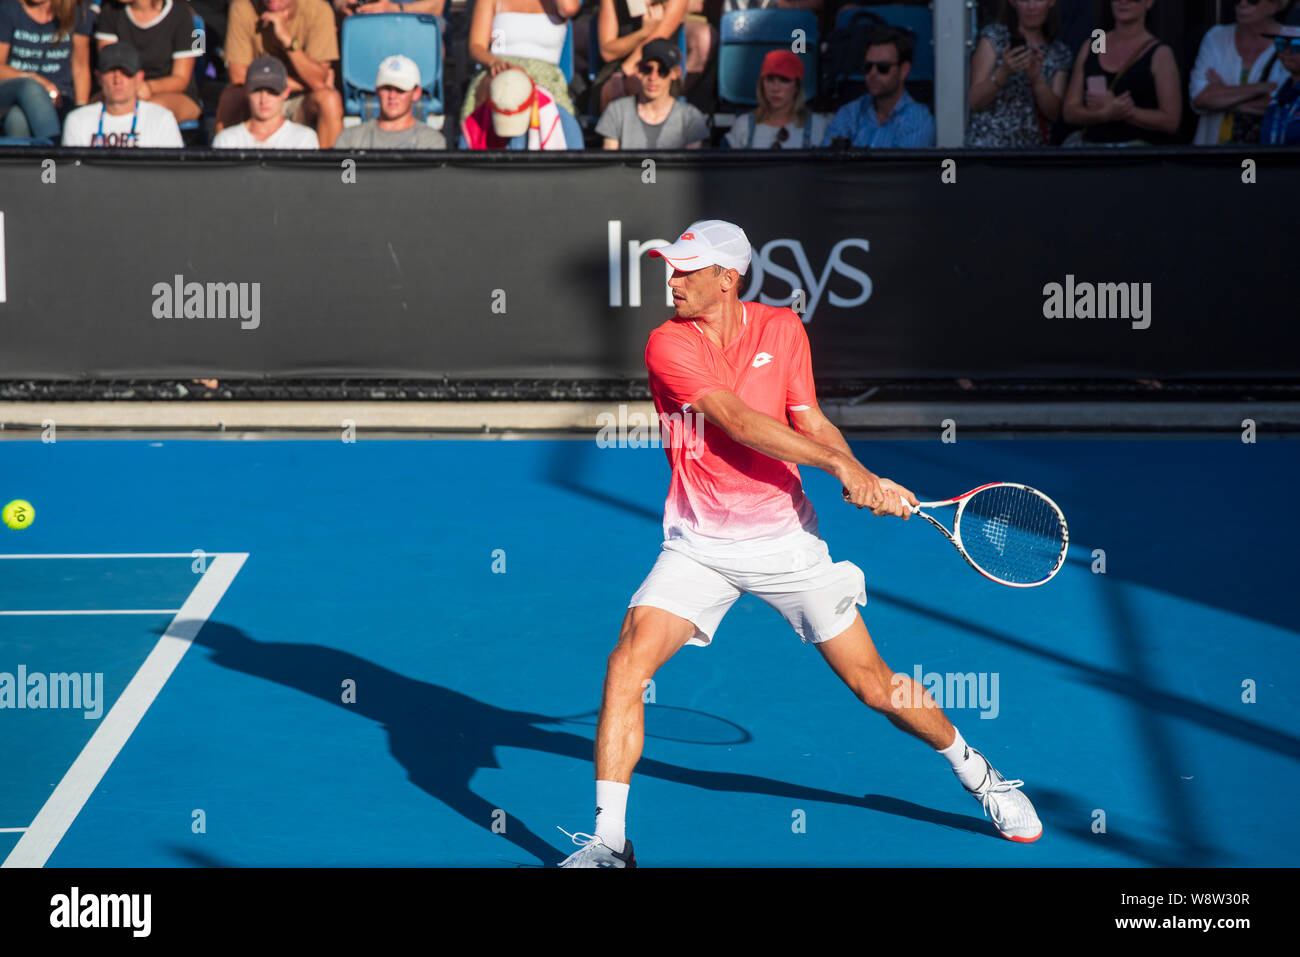 Australian tennis player John Millman playing a backhand shot in the Australian Open, Melbourne Stock Photo